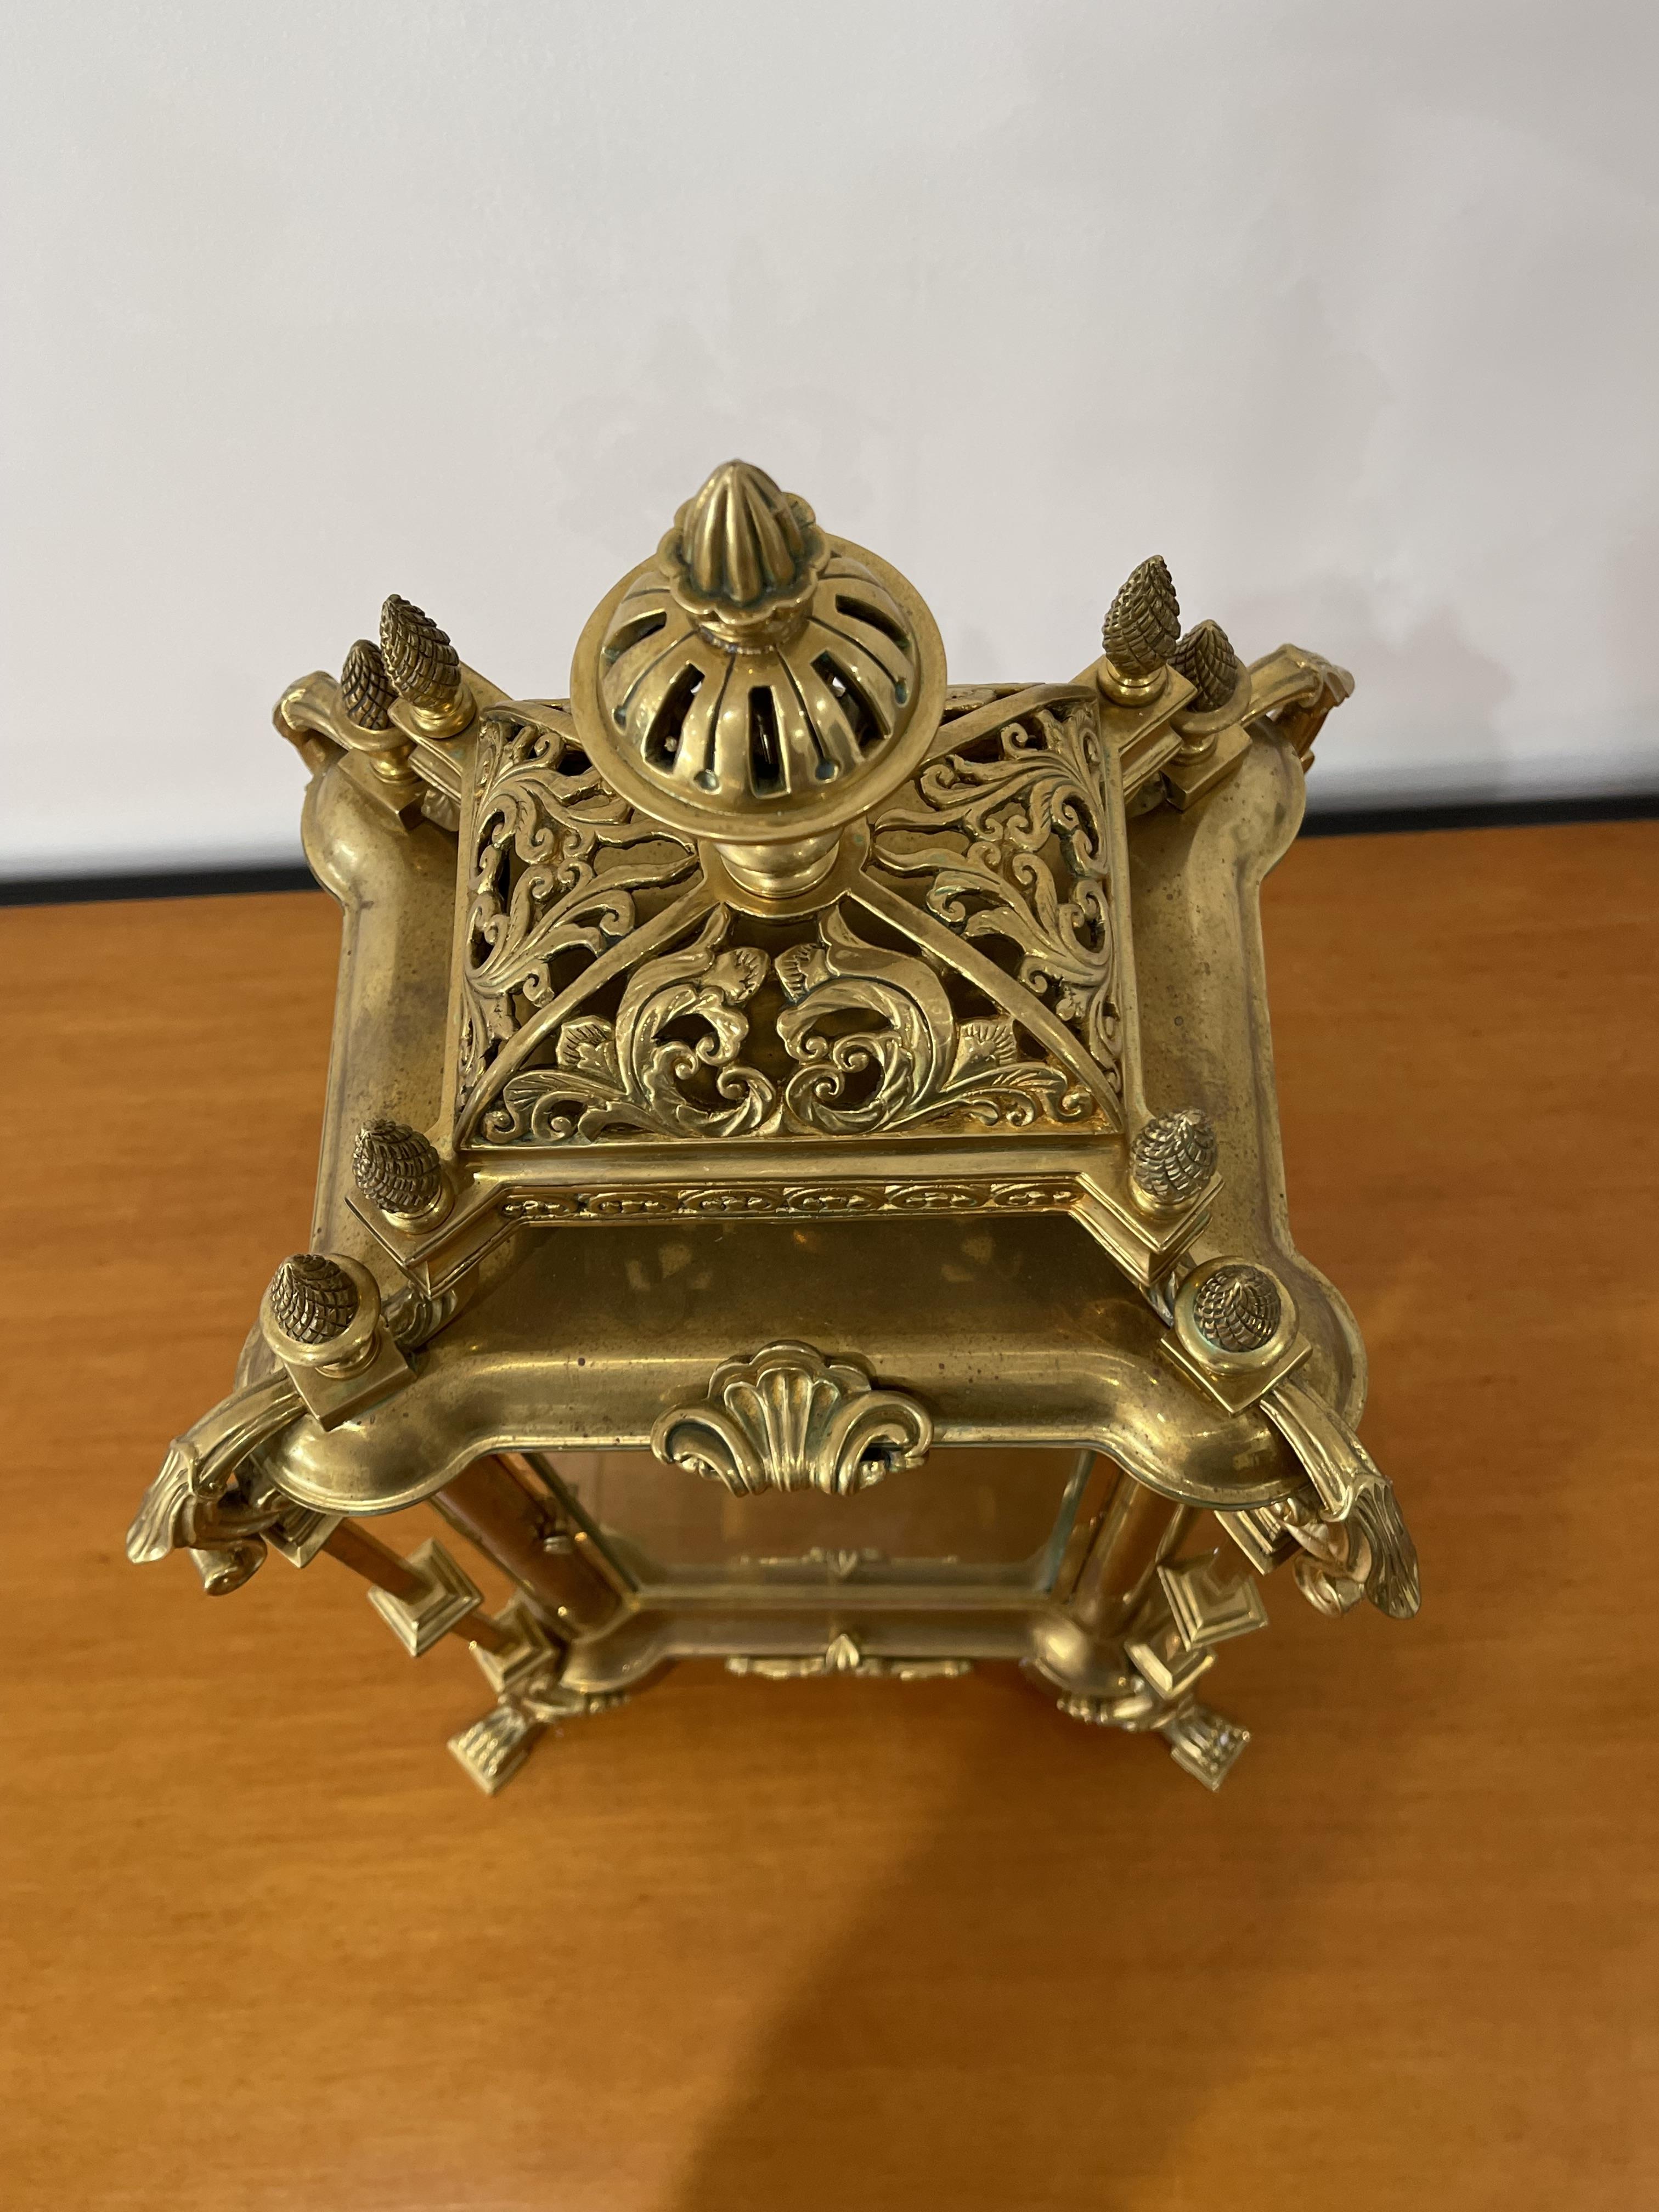 Stunning 8 Day Striking Brass Four Glass Ansonia Mantel Clock - Image 17 of 21